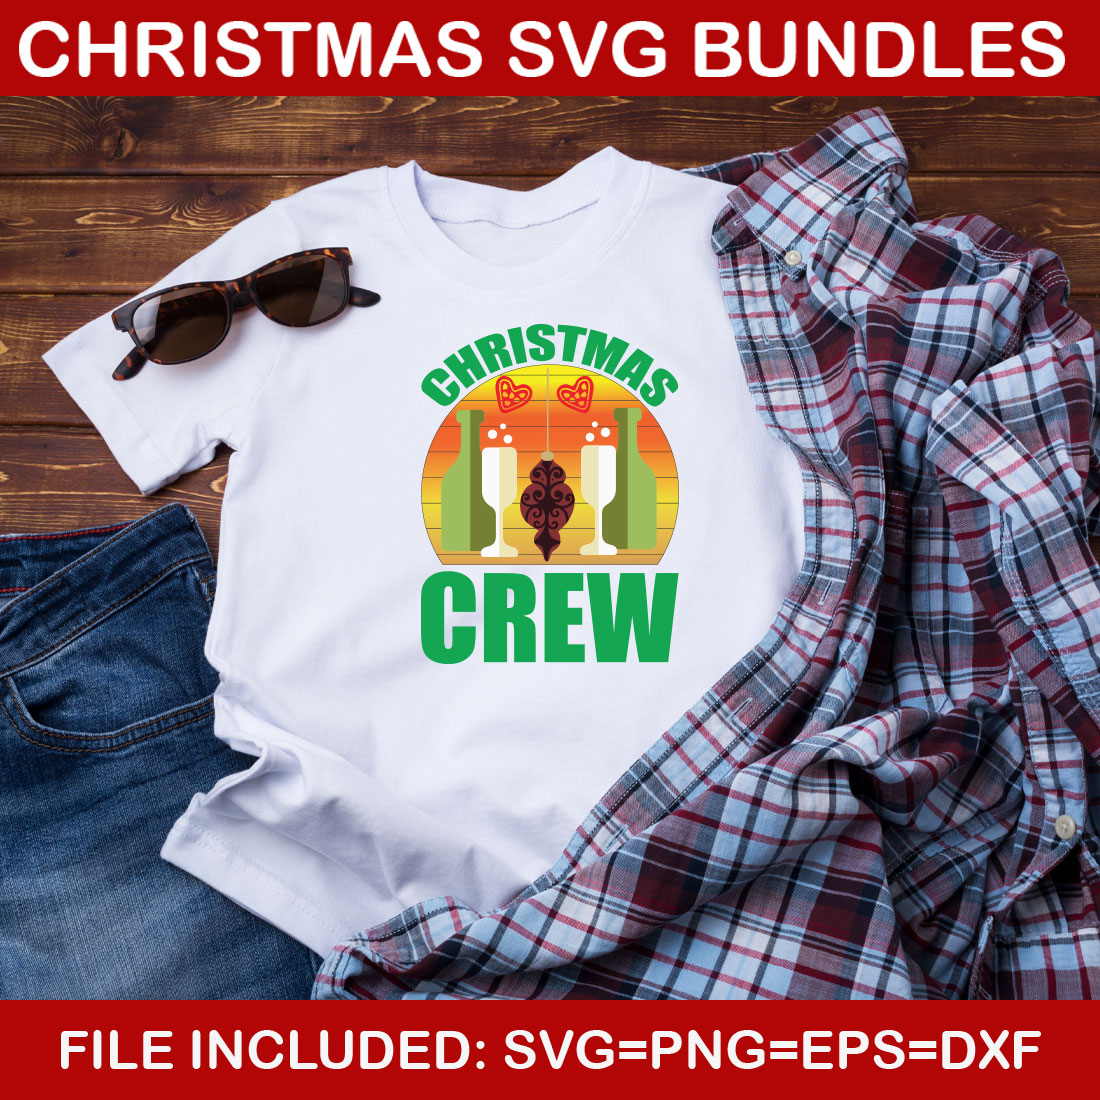 Ultimate List! 6 Christmas SVG Free Bundles preview image.